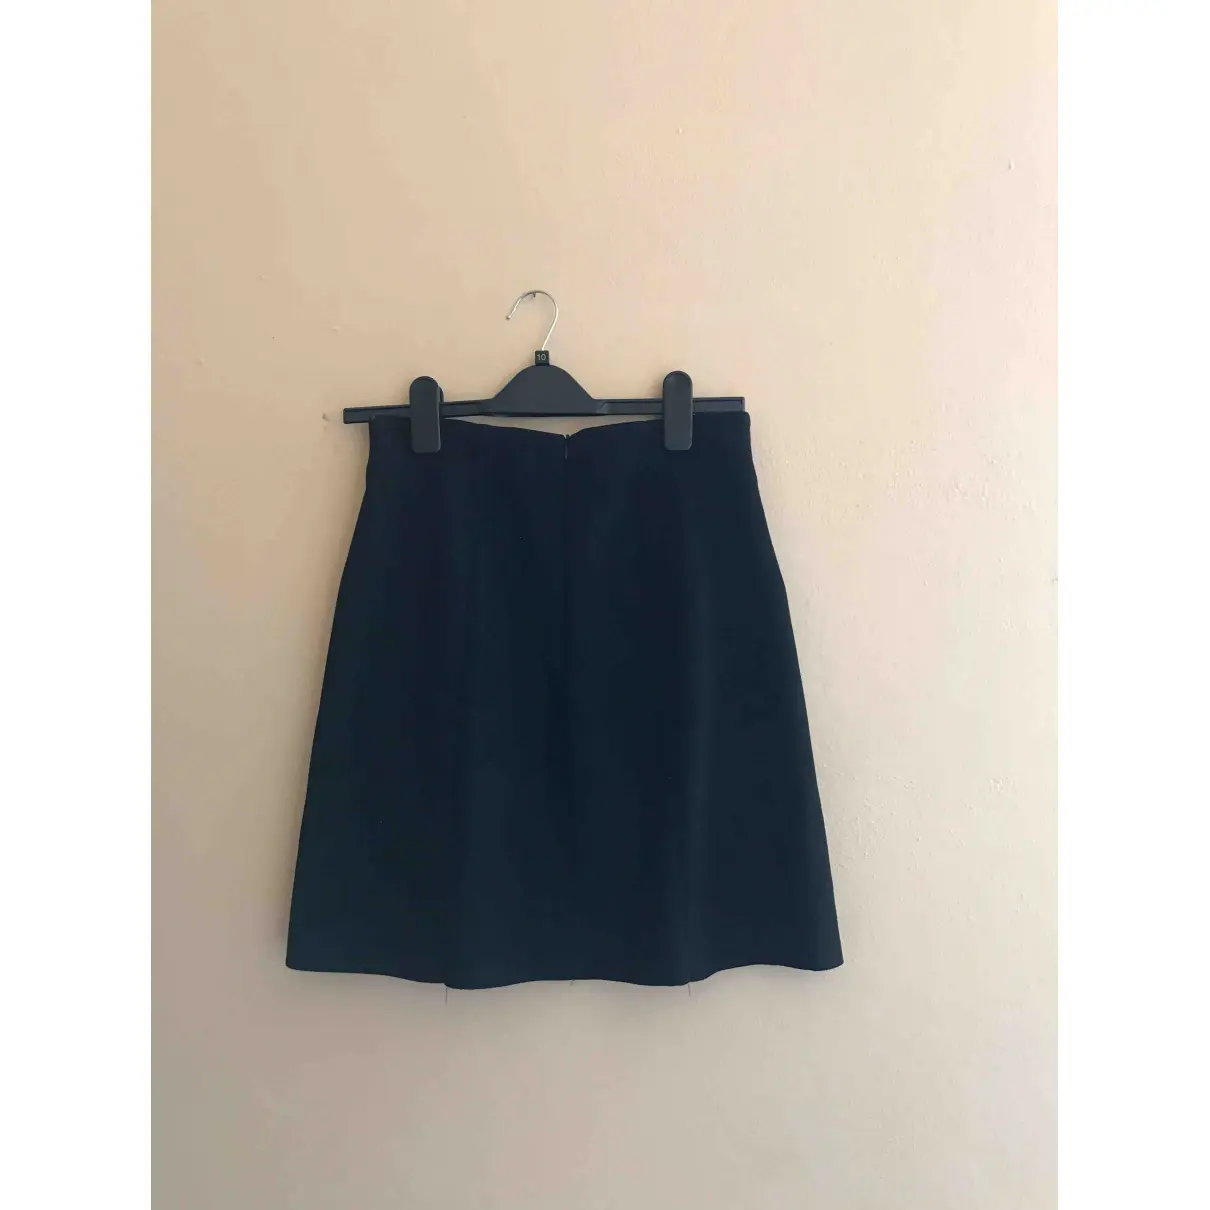 Buy Marella Mini skirt online